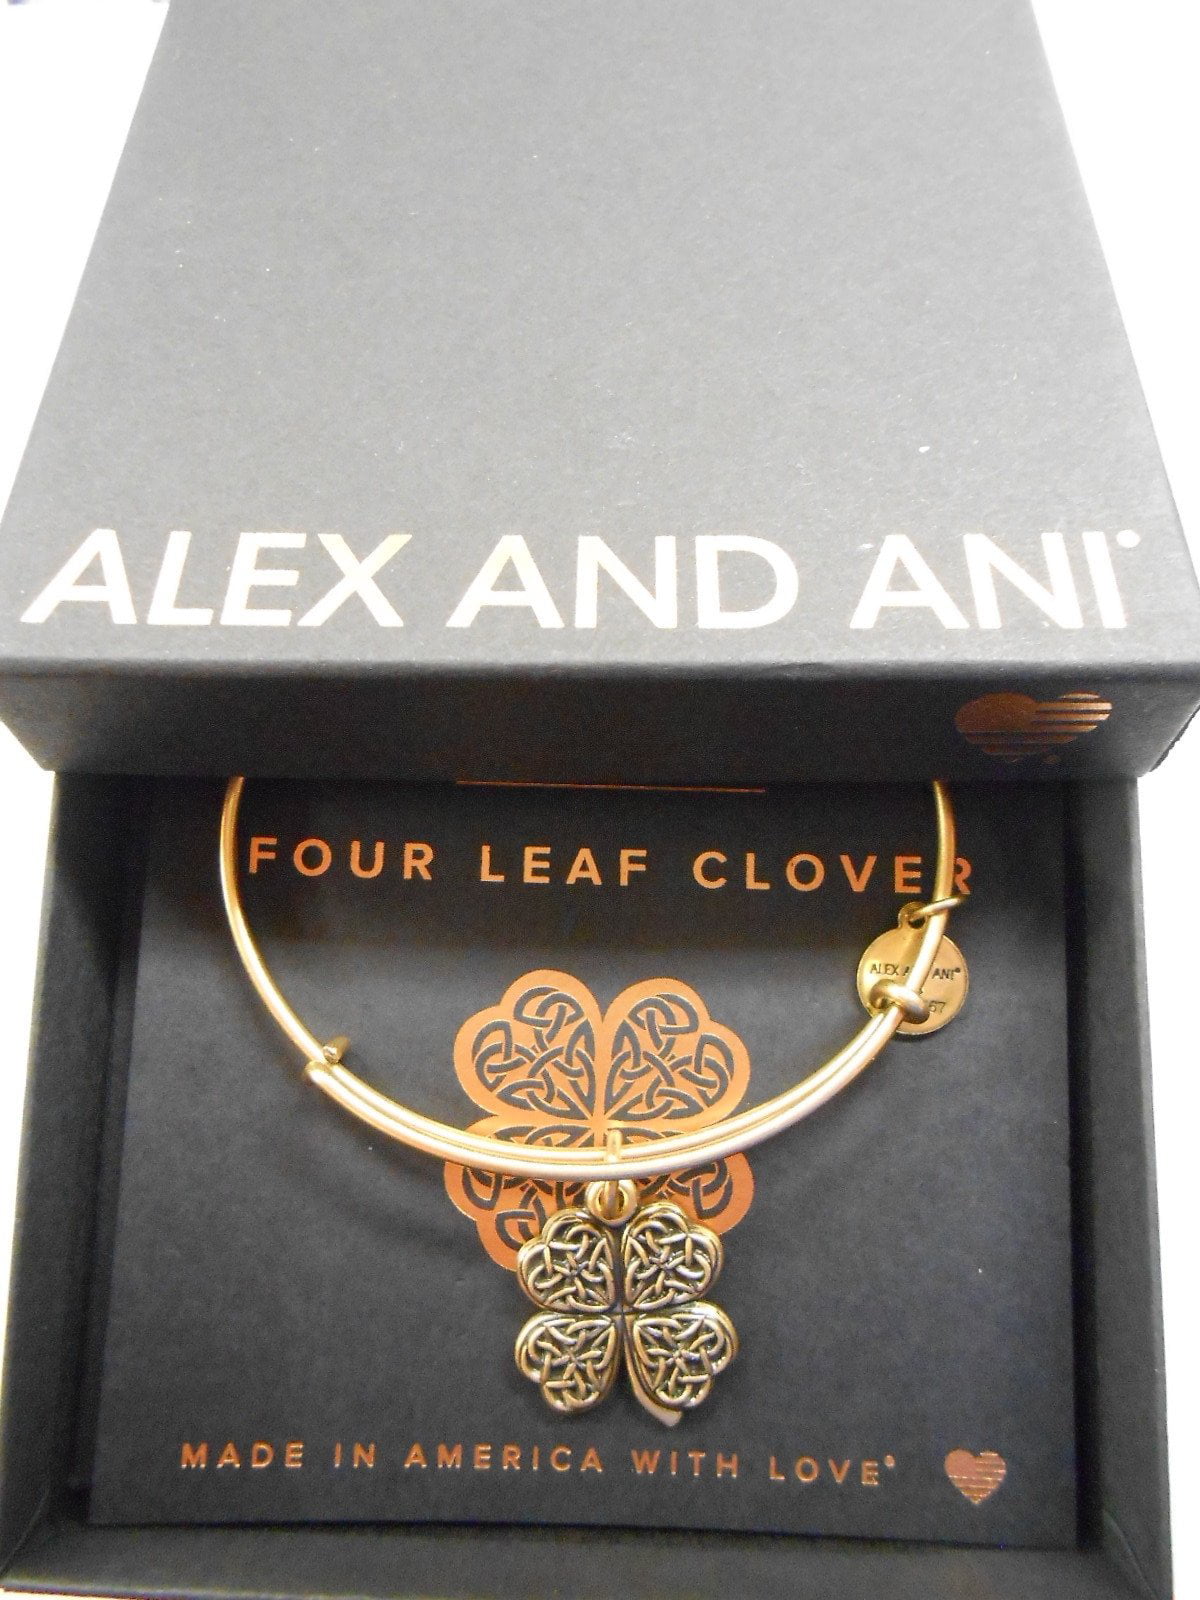 Alex and Ani Four Leaf Clover IV Bangle Bracelet ROSE GOLD New Tag Box Card